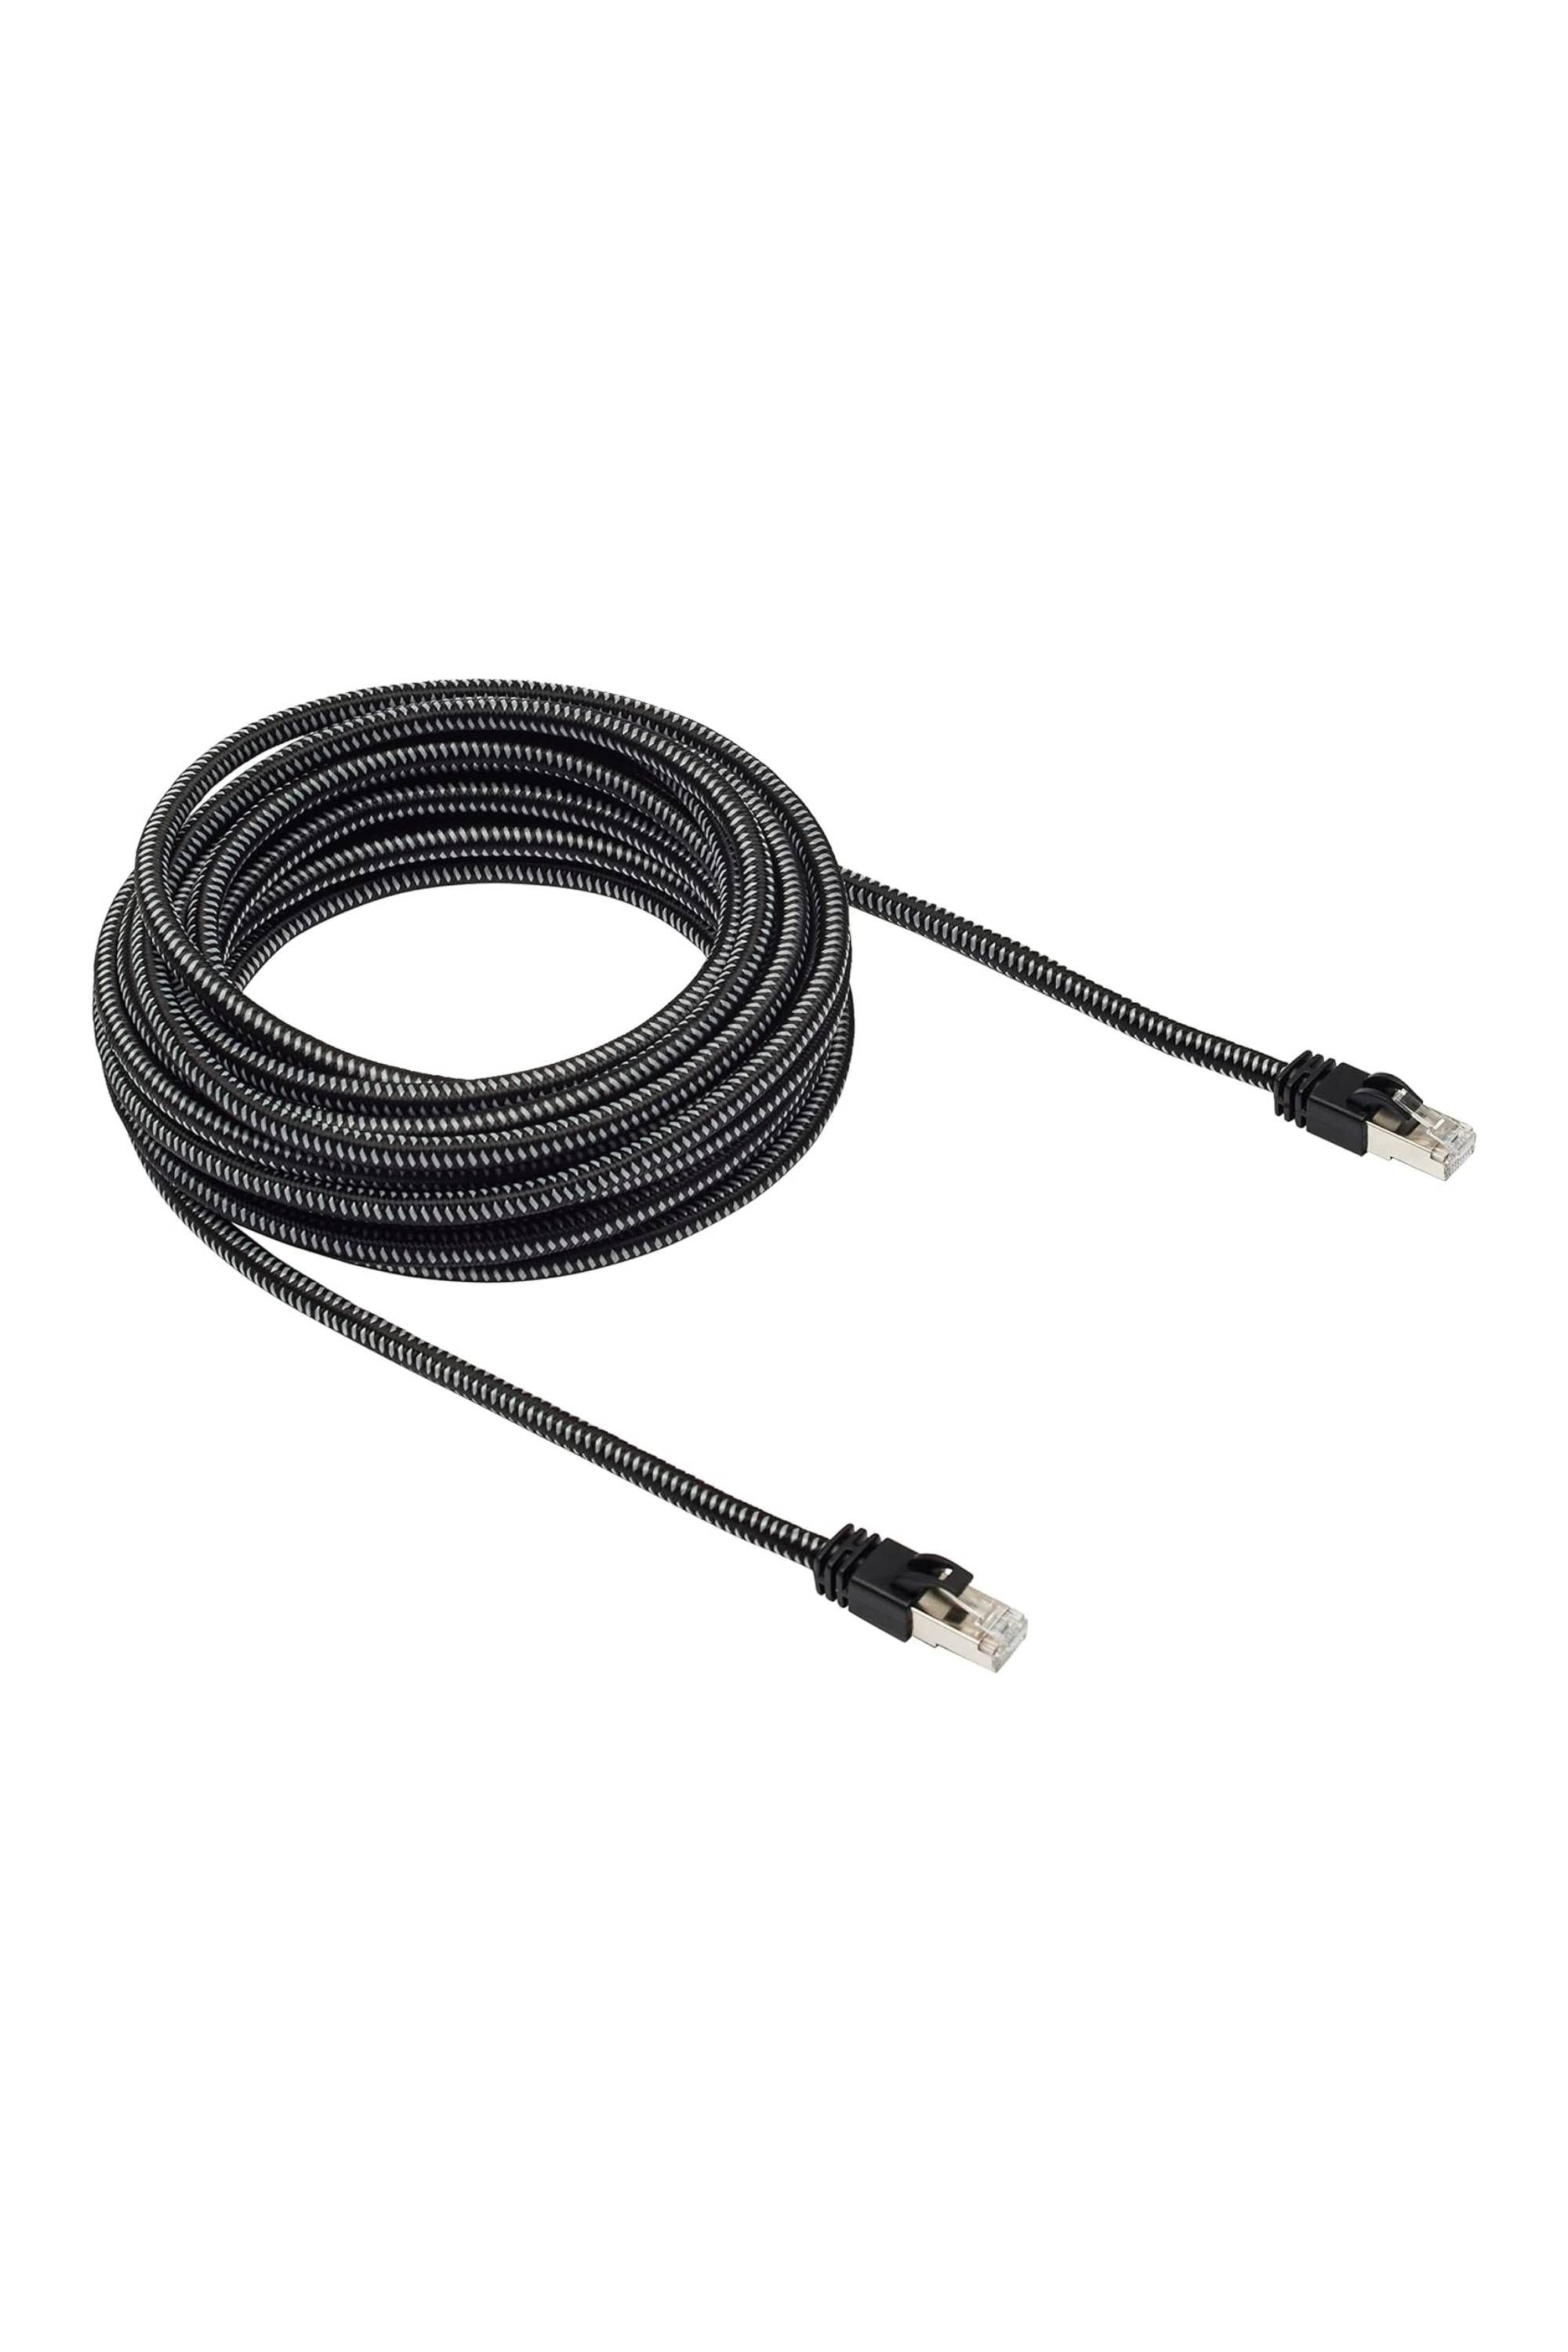 Amazon Basics 25-Foot RJ45 Cat 7 Ethernet Patch Cable